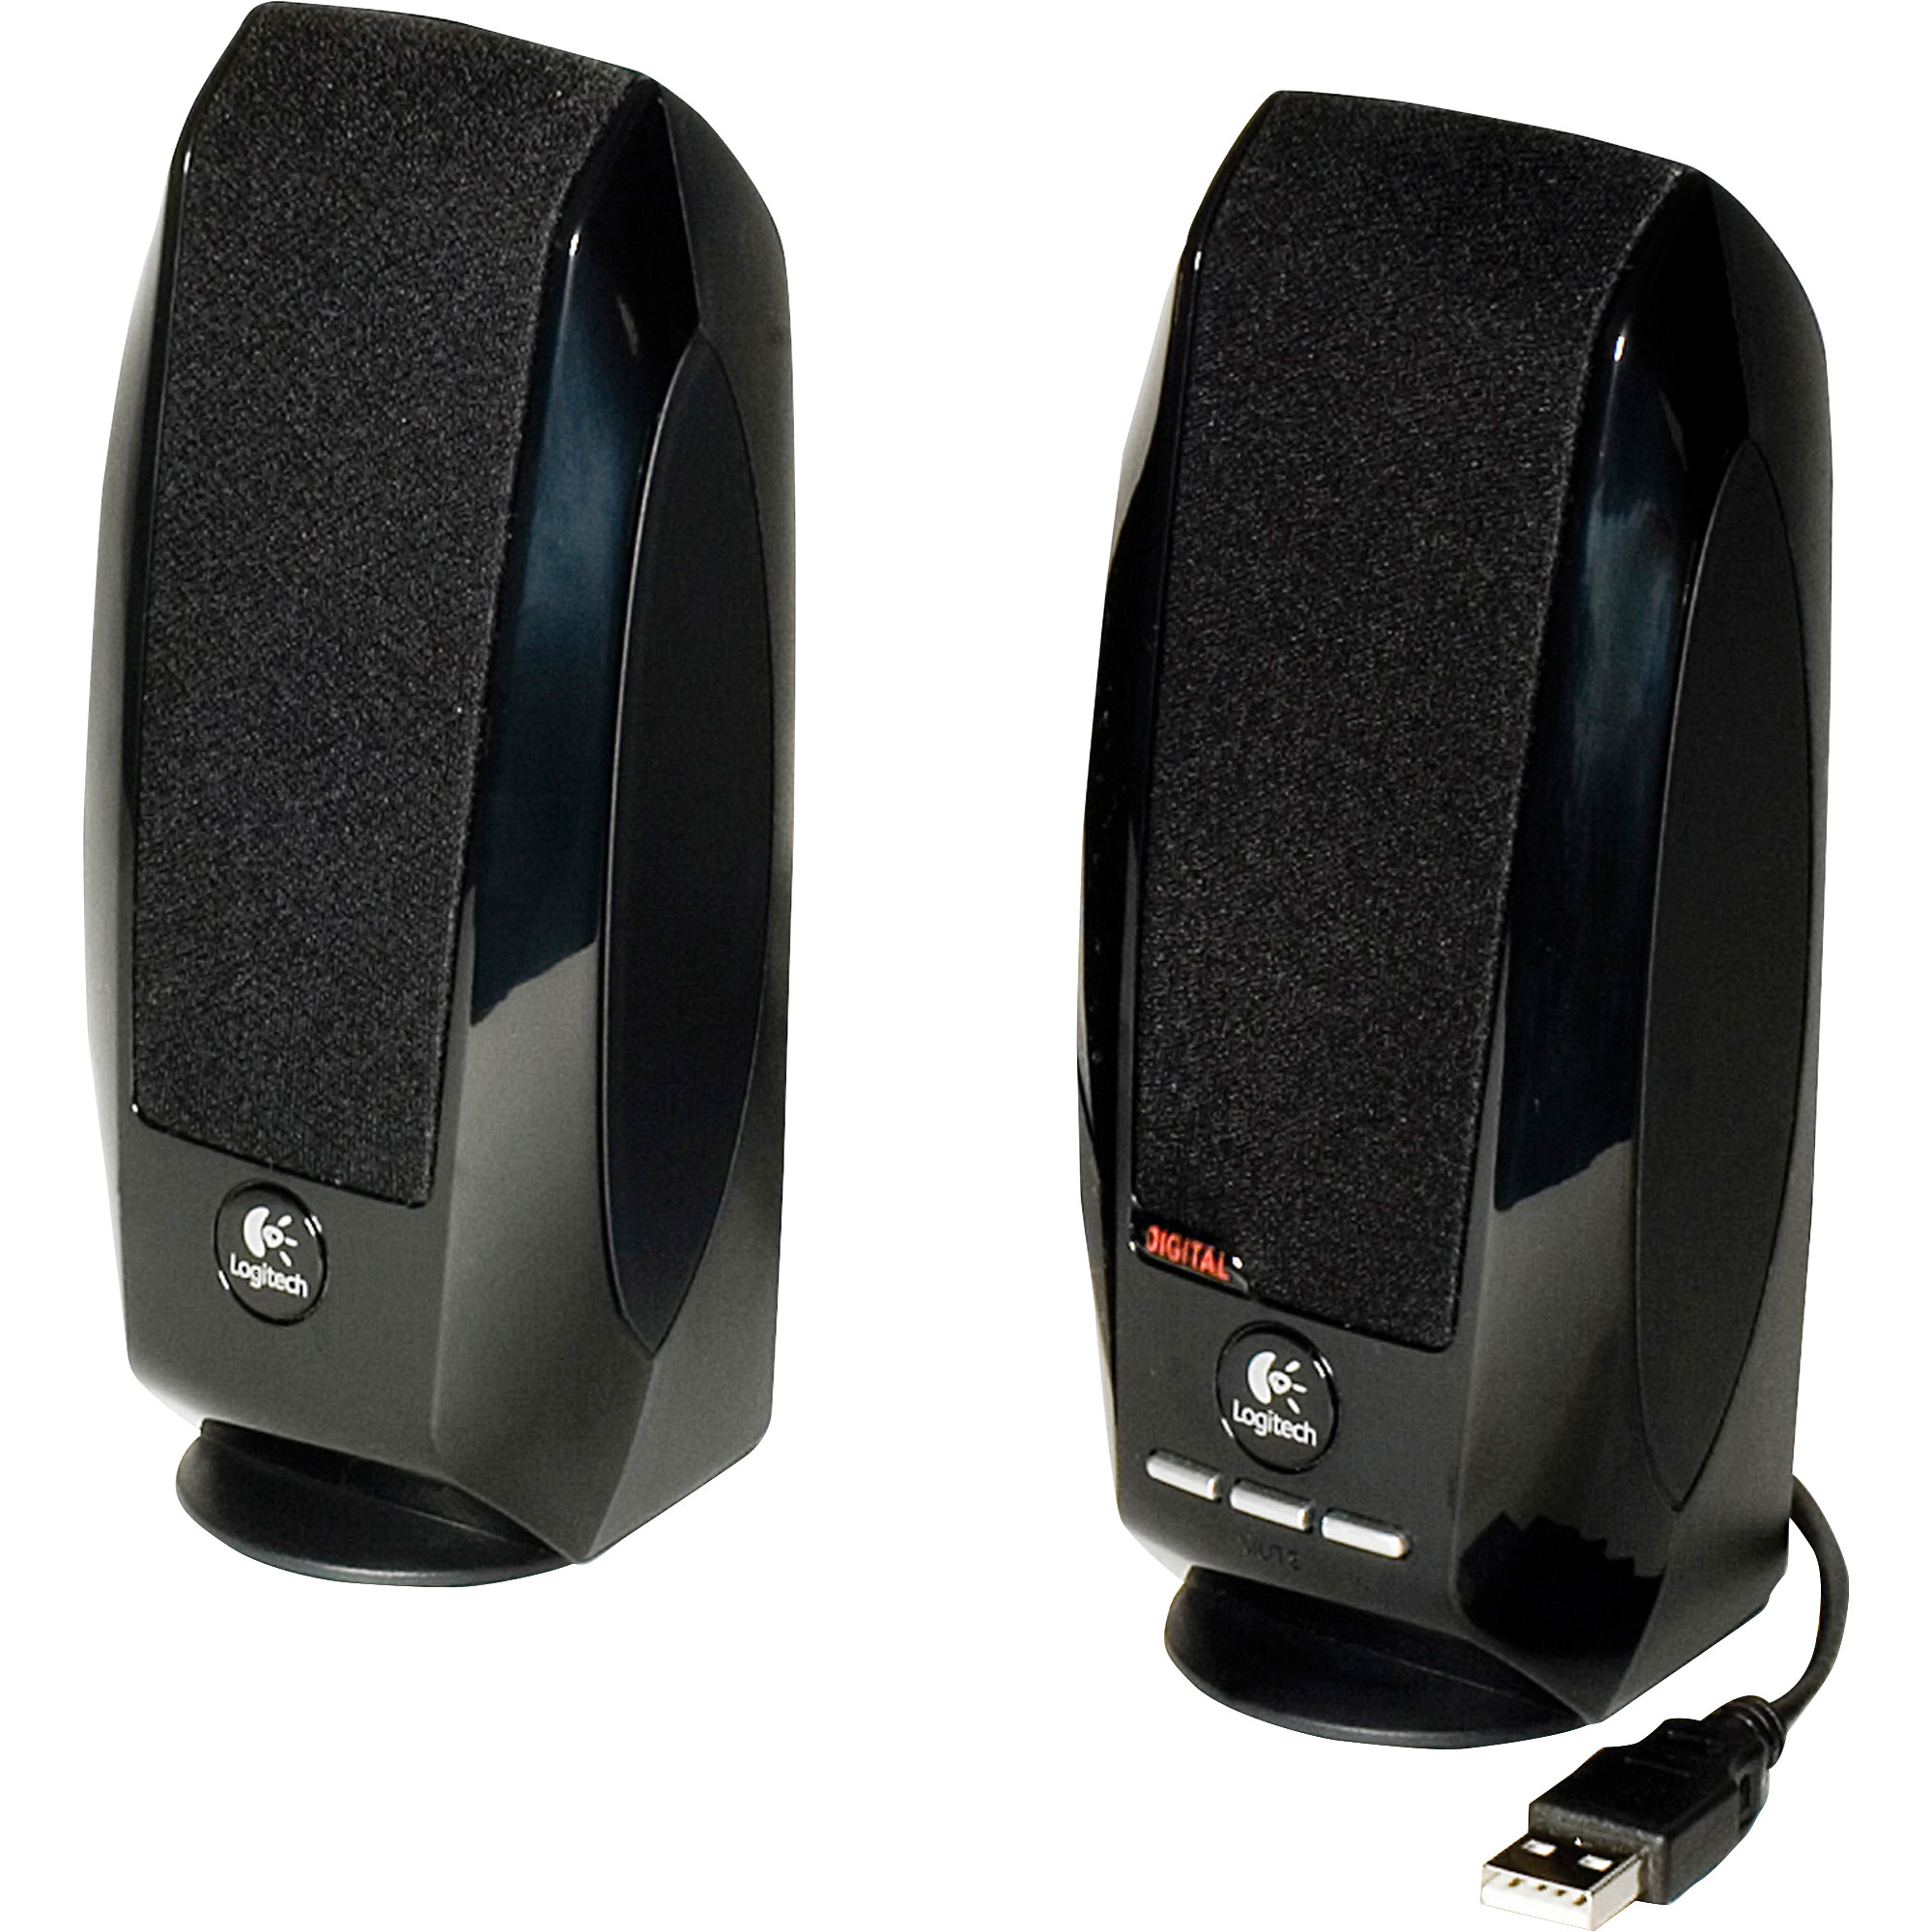 Logitech S-150 2.0 Speaker System - 1.20 W RMS - Black - image 2 of 2